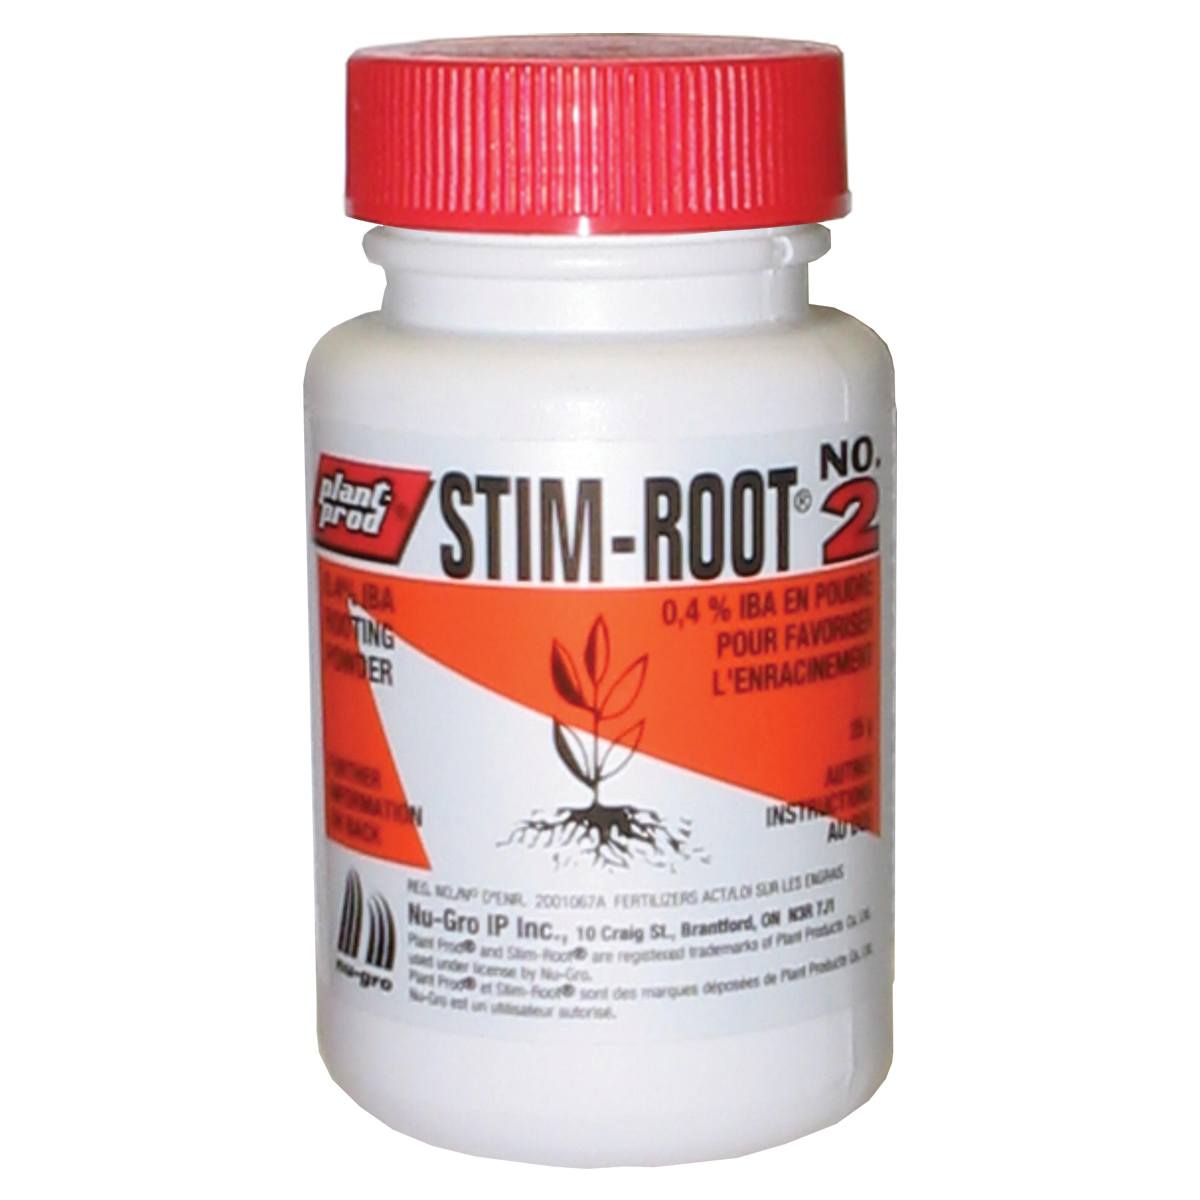 6842150_Stim-Root 2 25g_CMYKprint